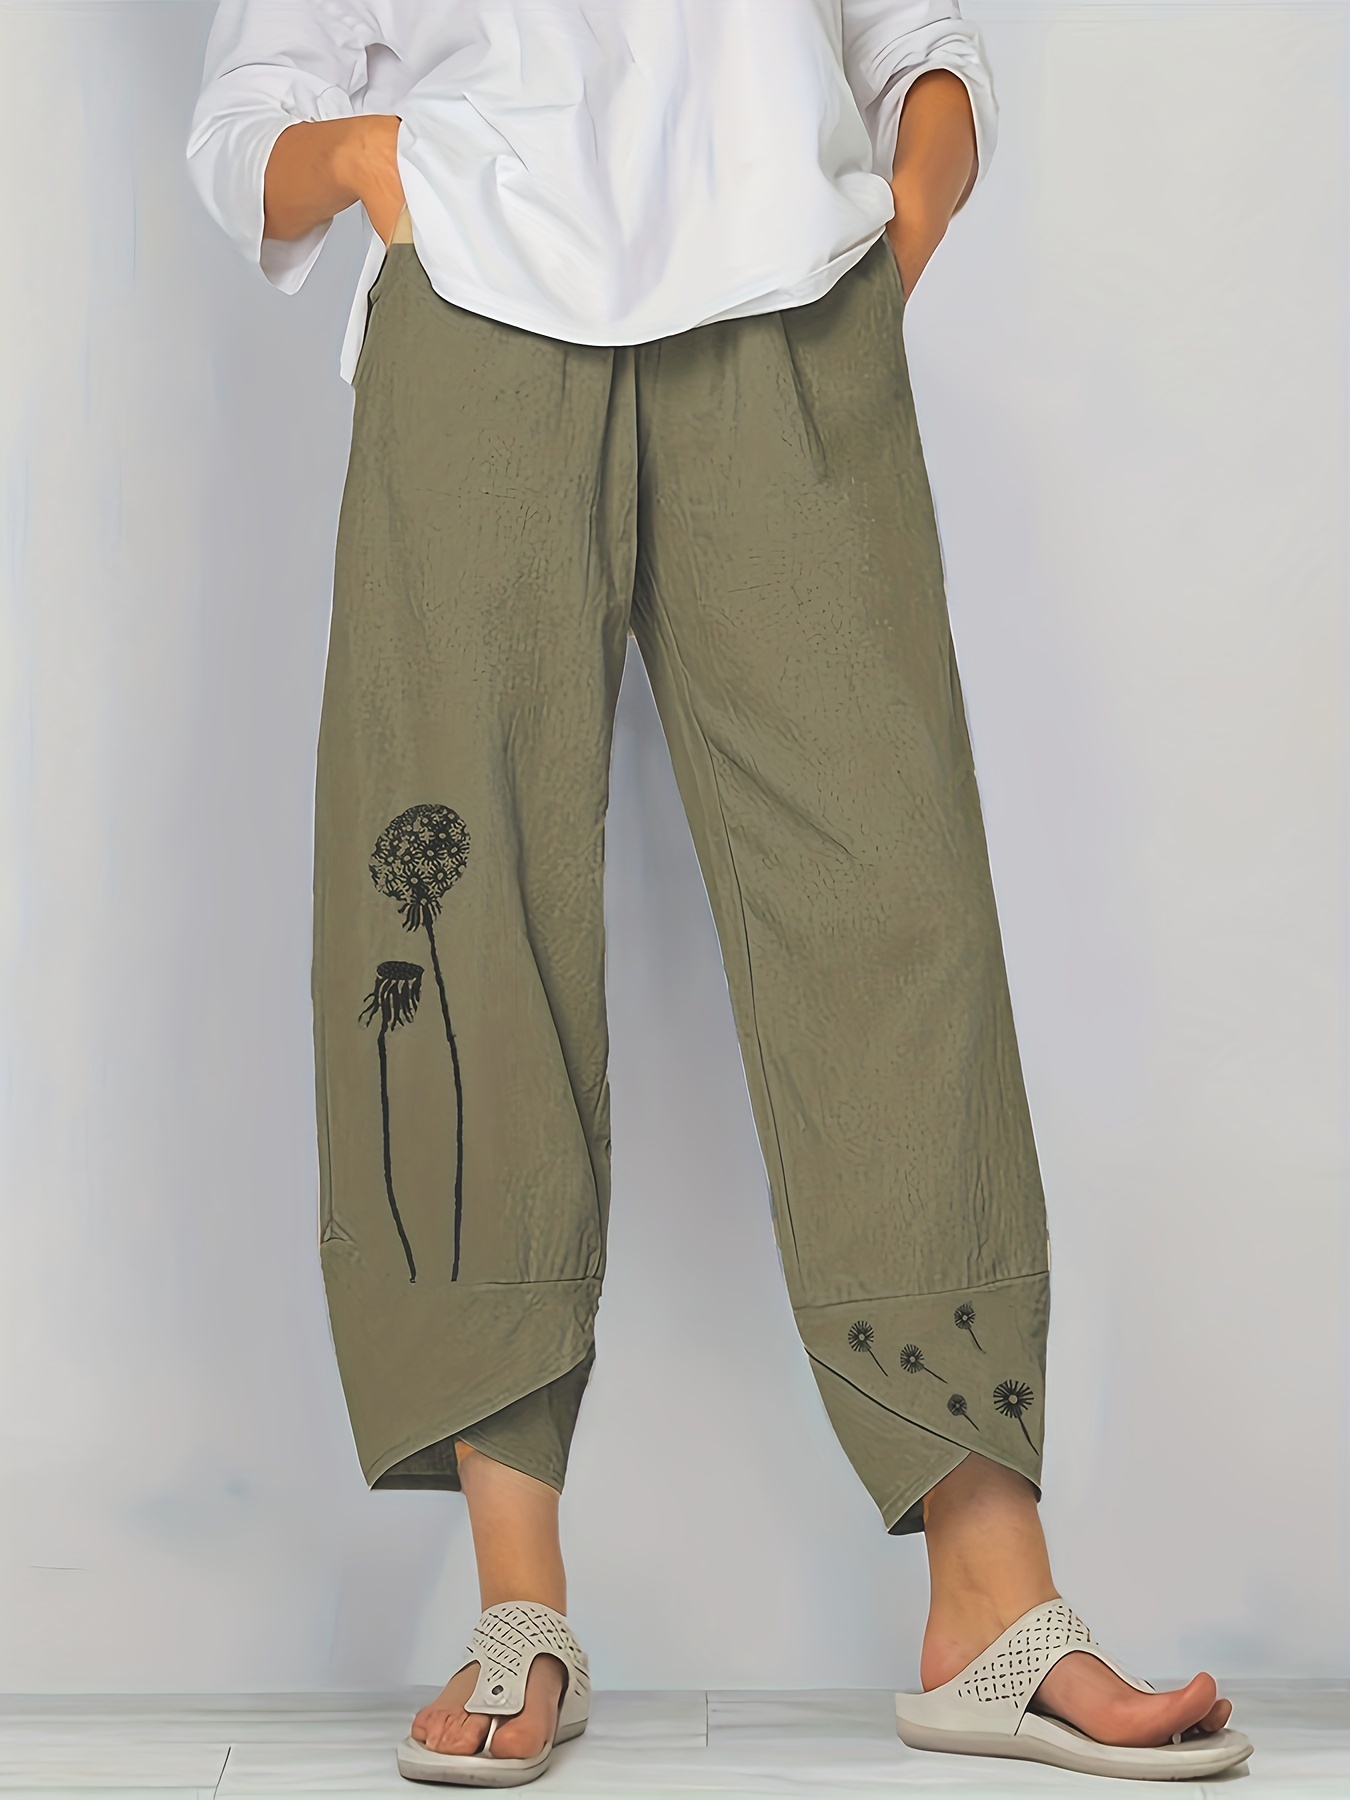 Women's Cotton Linen Harem Pants - Casual Elastic Waist Summer Baggy Pants  - Loose Comfy Lounge Trousers with Pockets